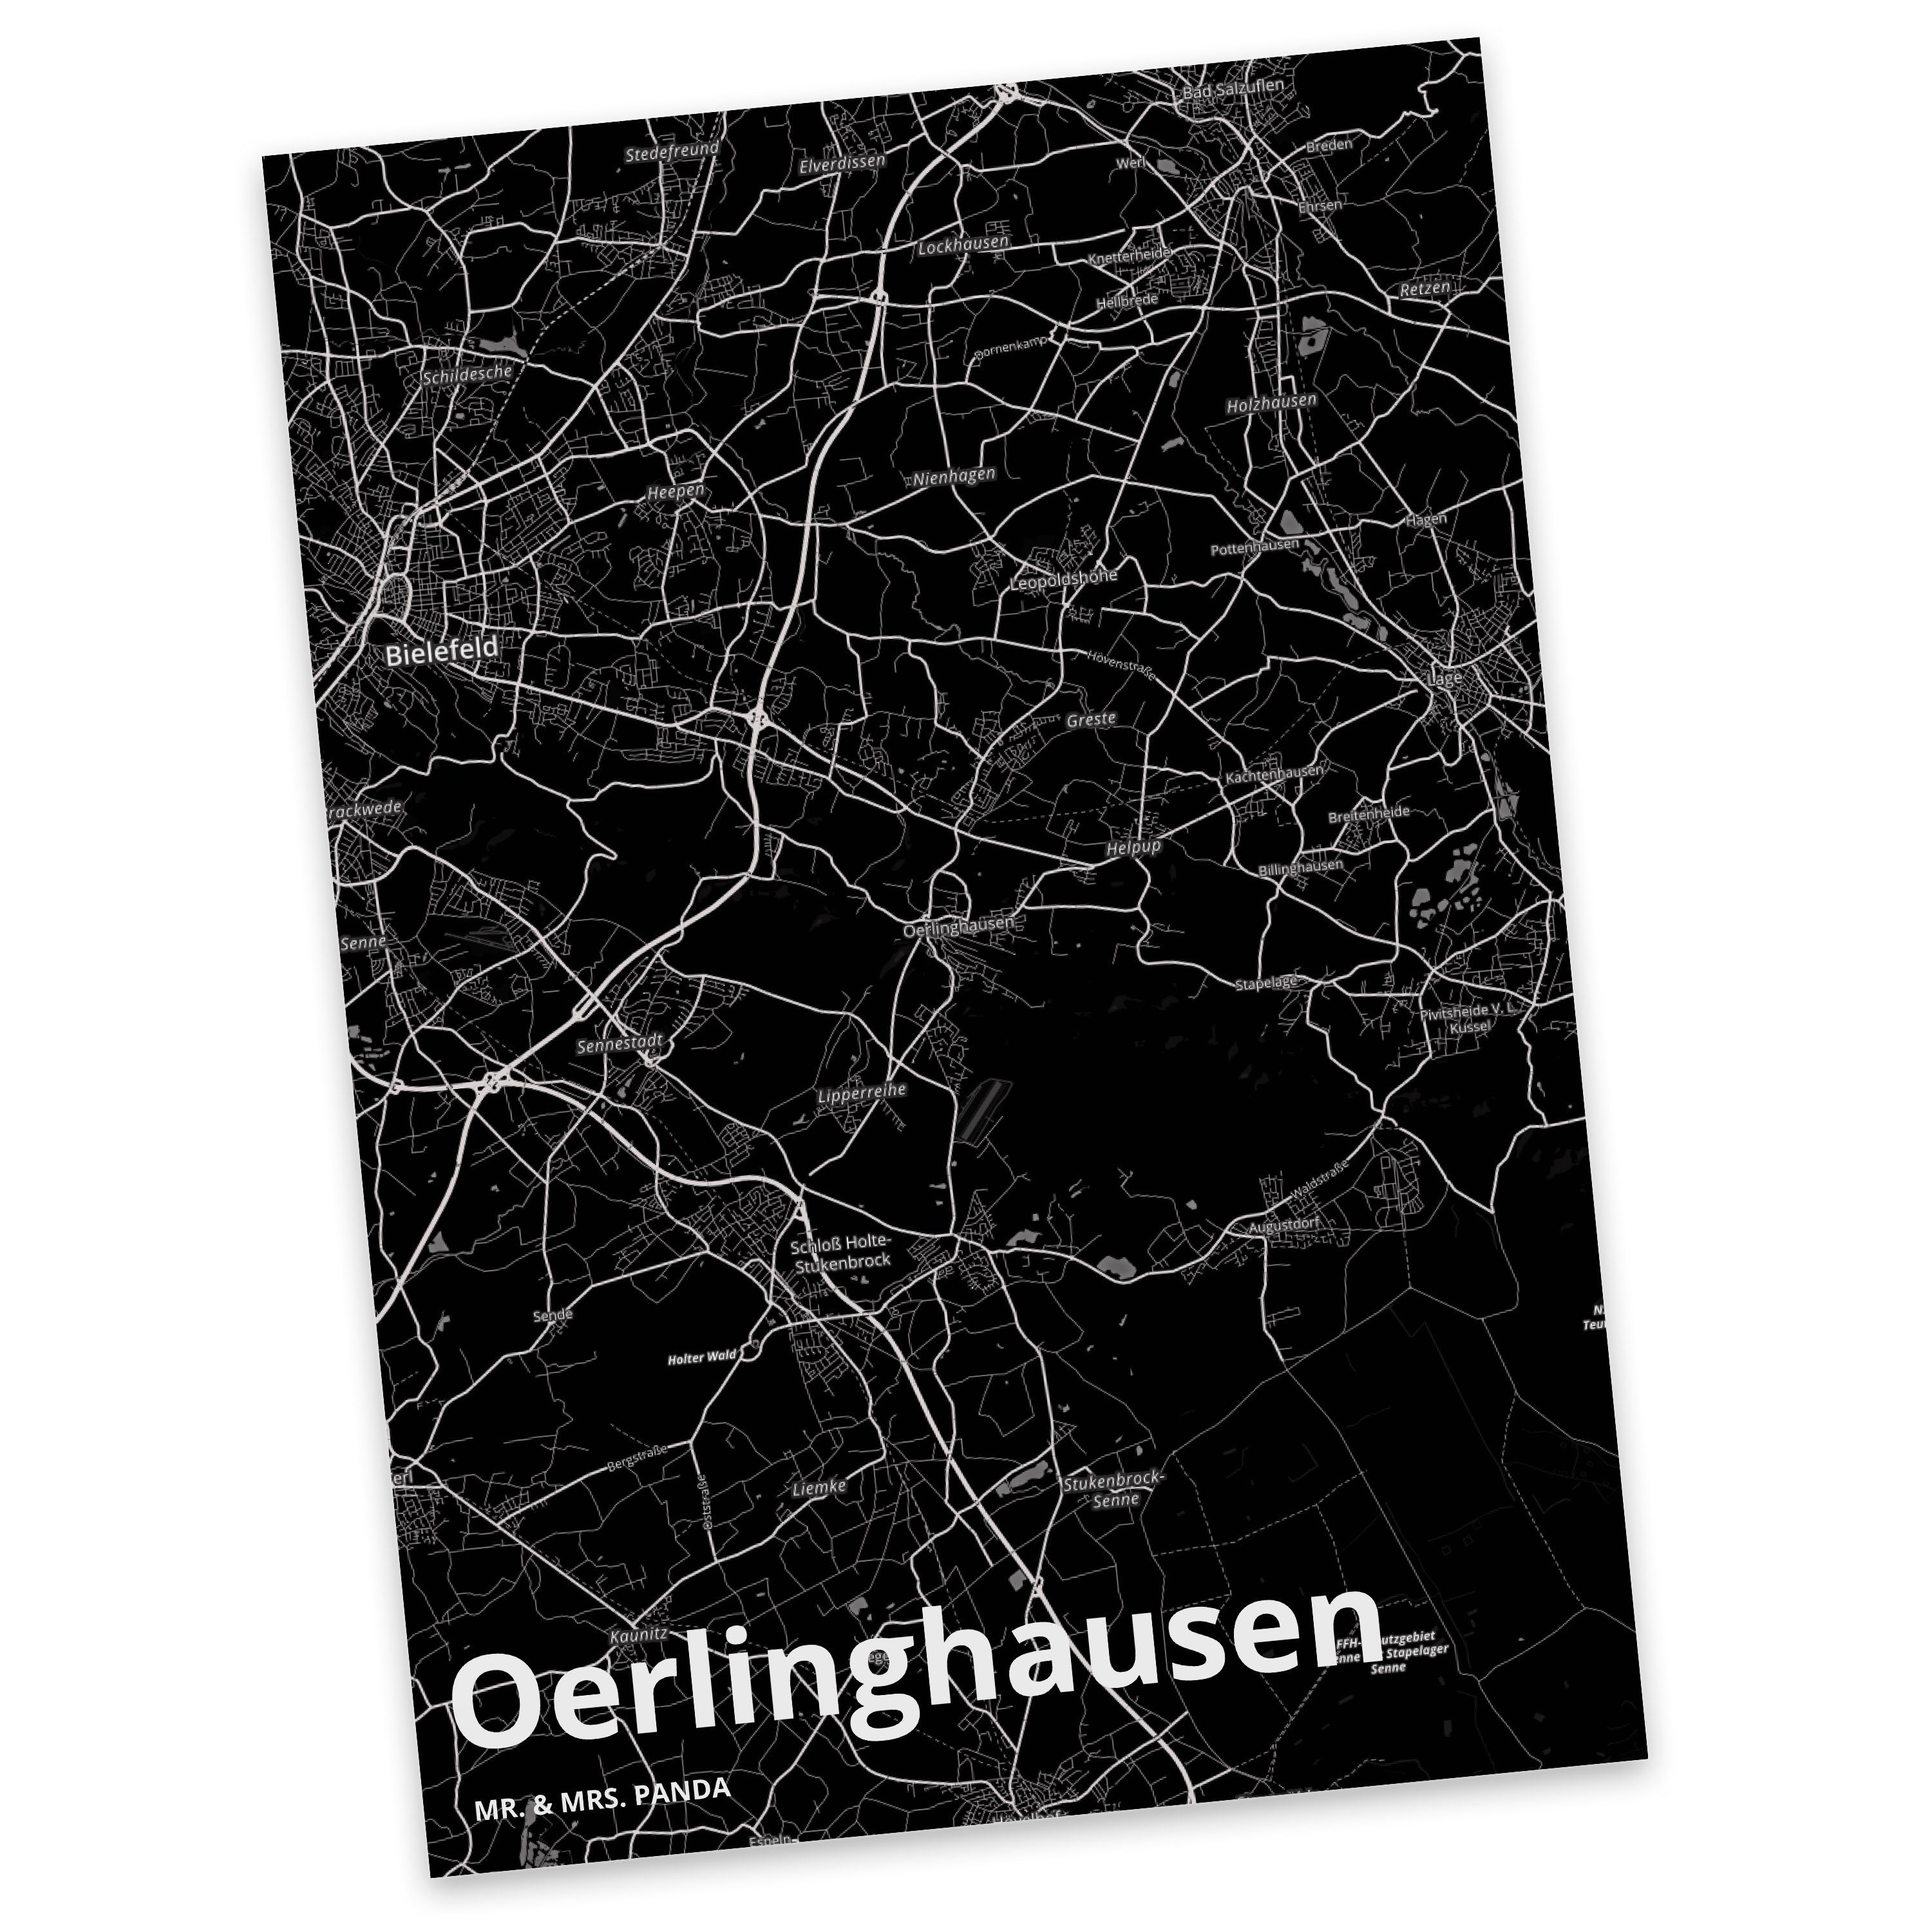 Mr. & Mrs. Panda Postkarte Oerlinghausen - Geschenk, Ort, Dankeskarte, Stadt Dorf Karte Landkart | Grußkarten